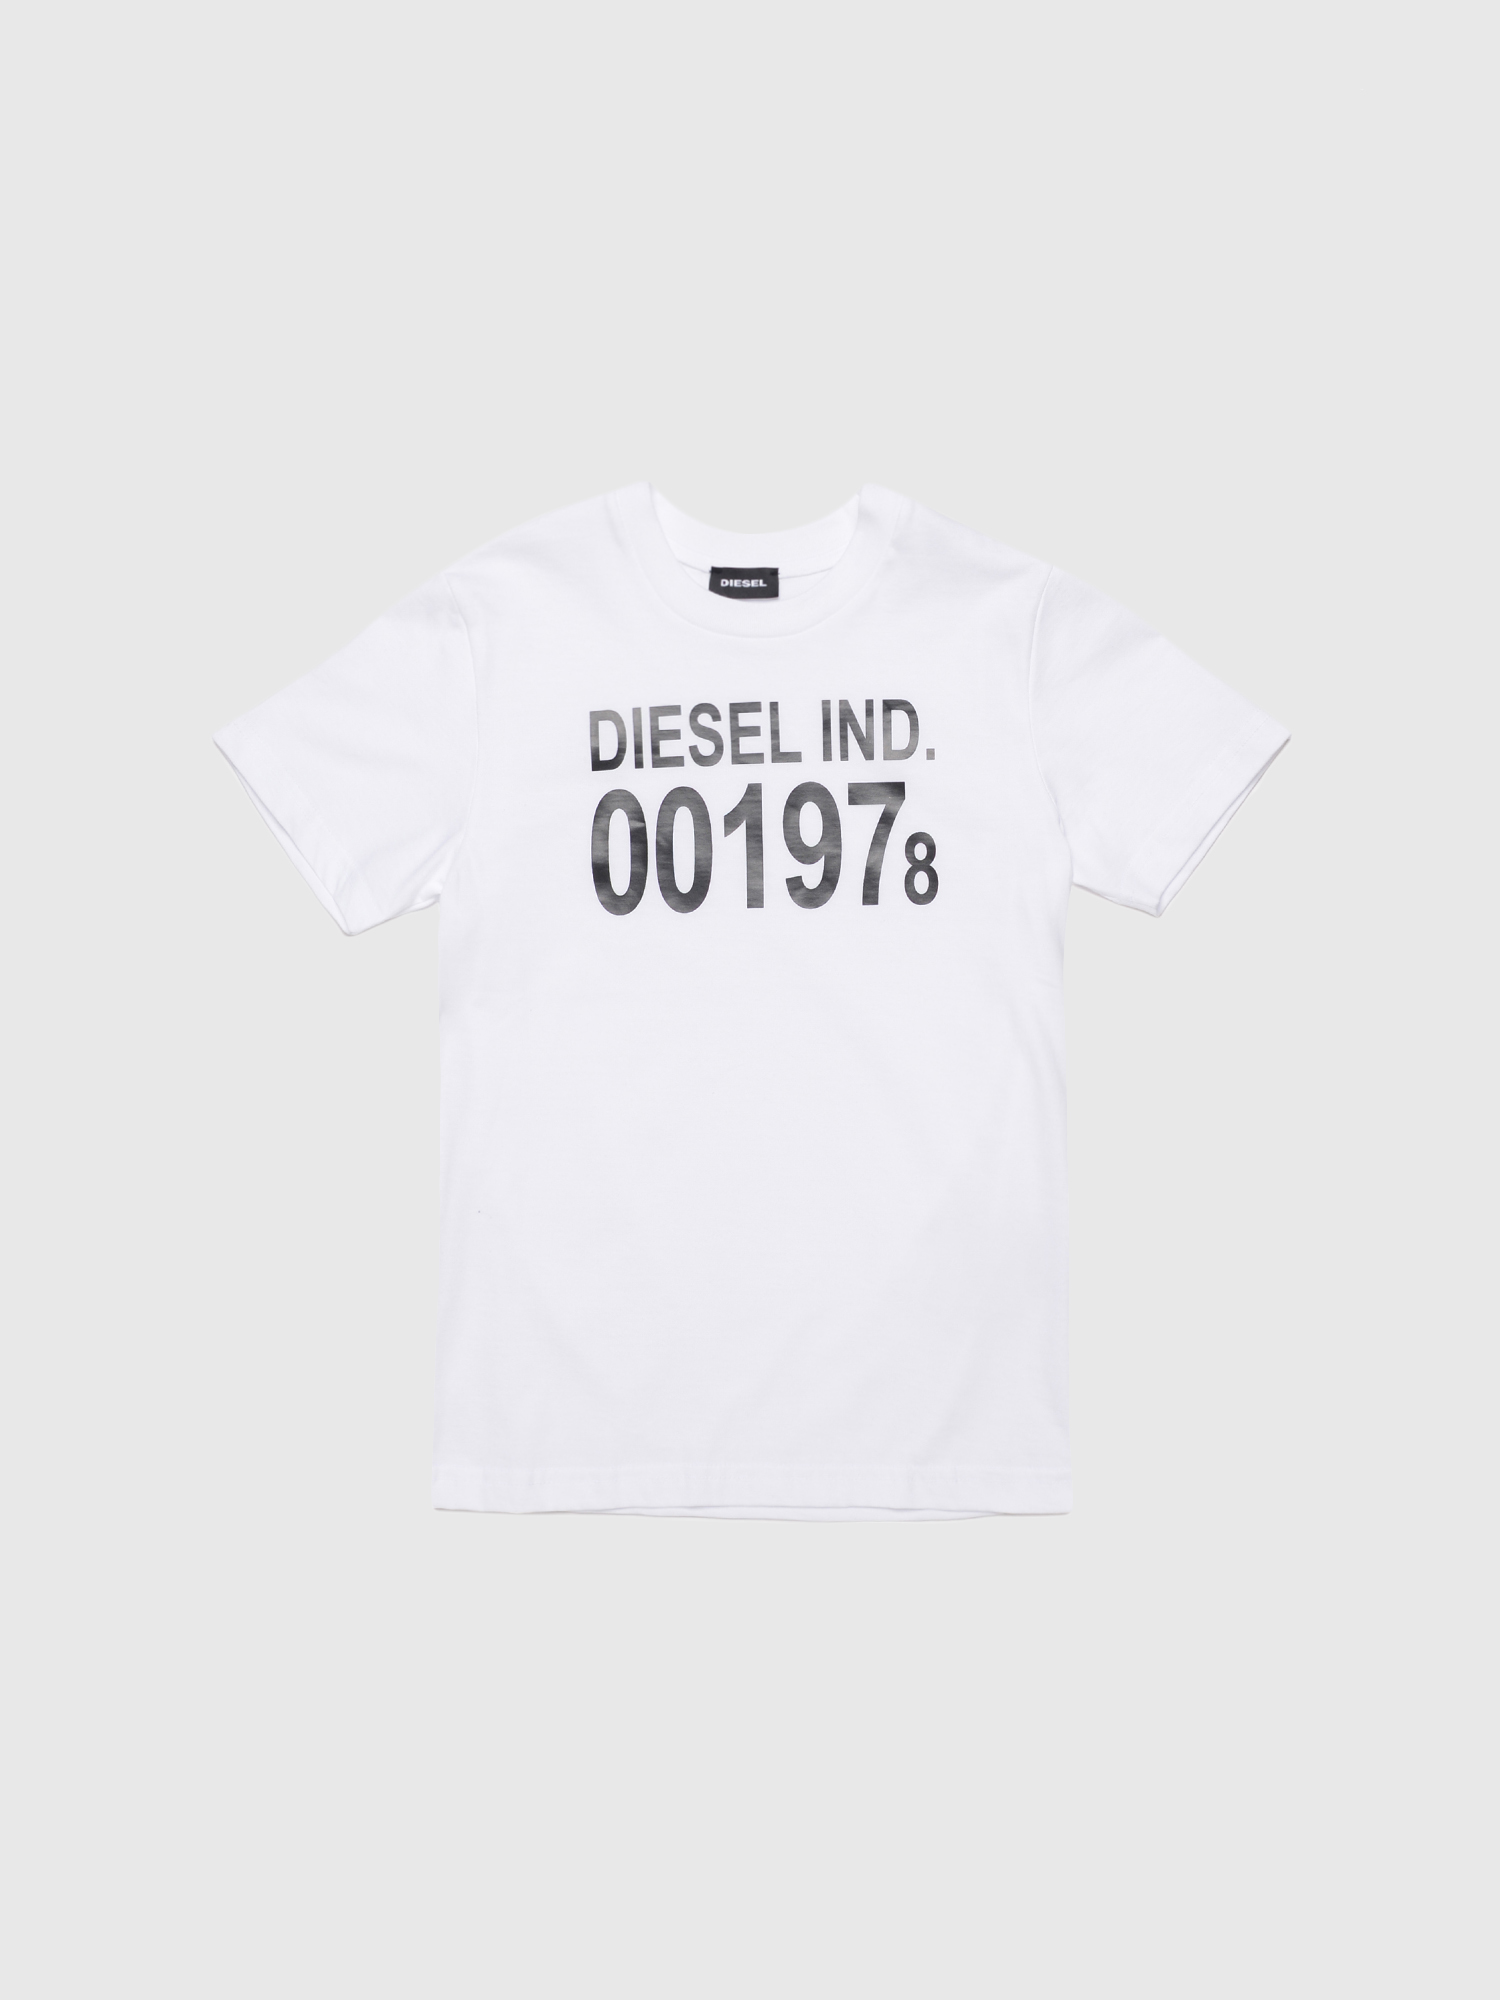 Diesel - TDIEGO001978, White - Image 1